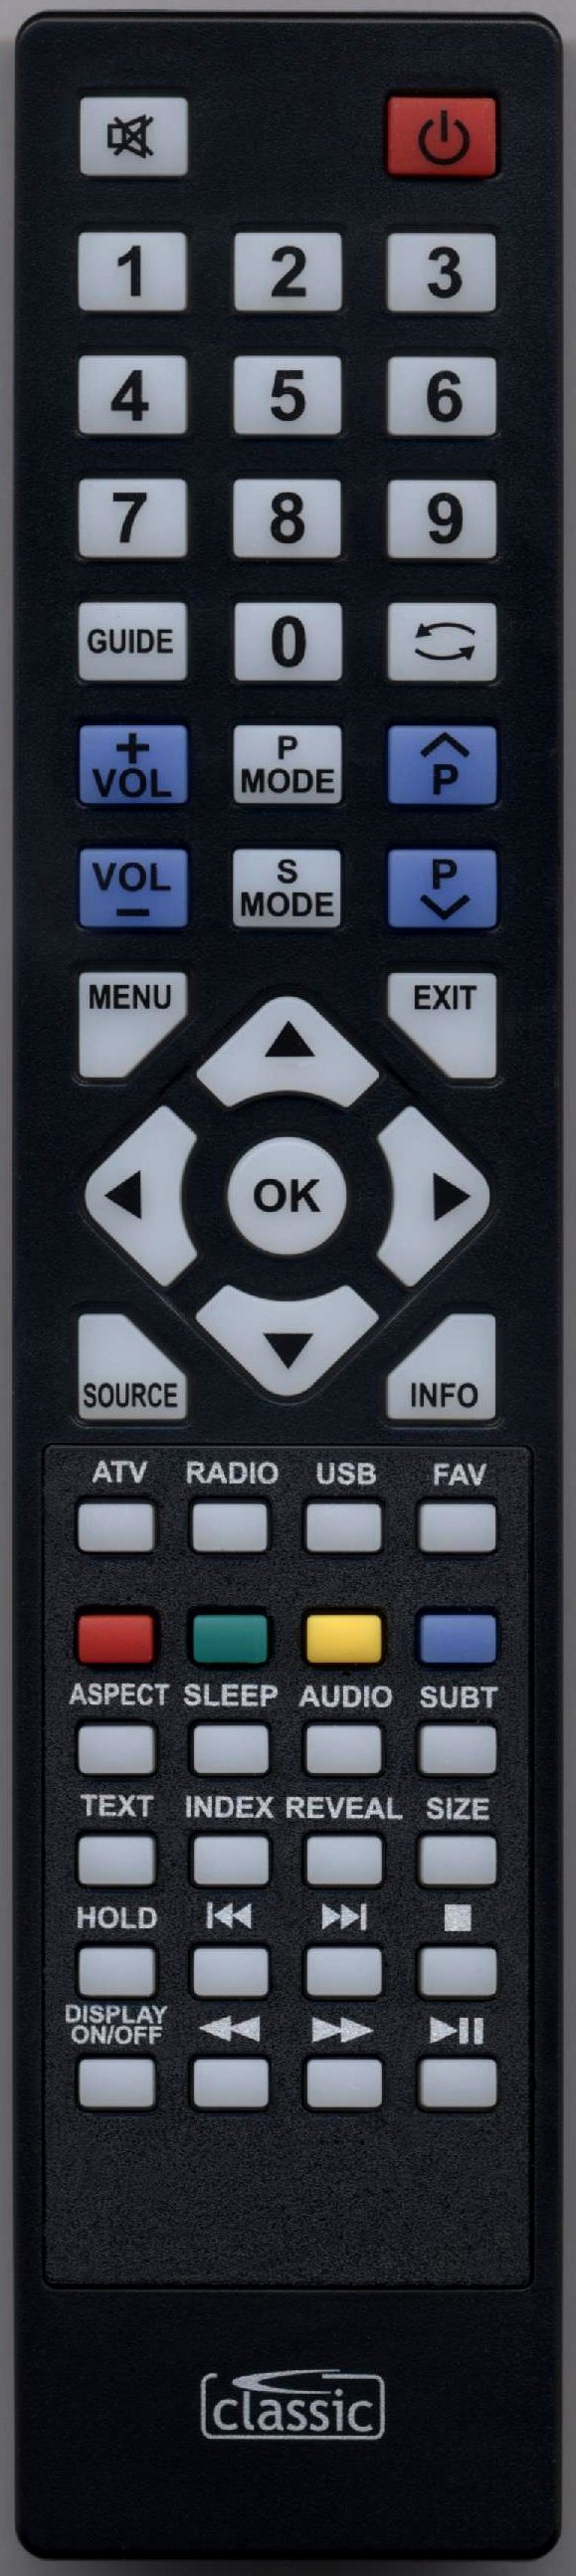 UMC - W40/58G Alternative Remote Control